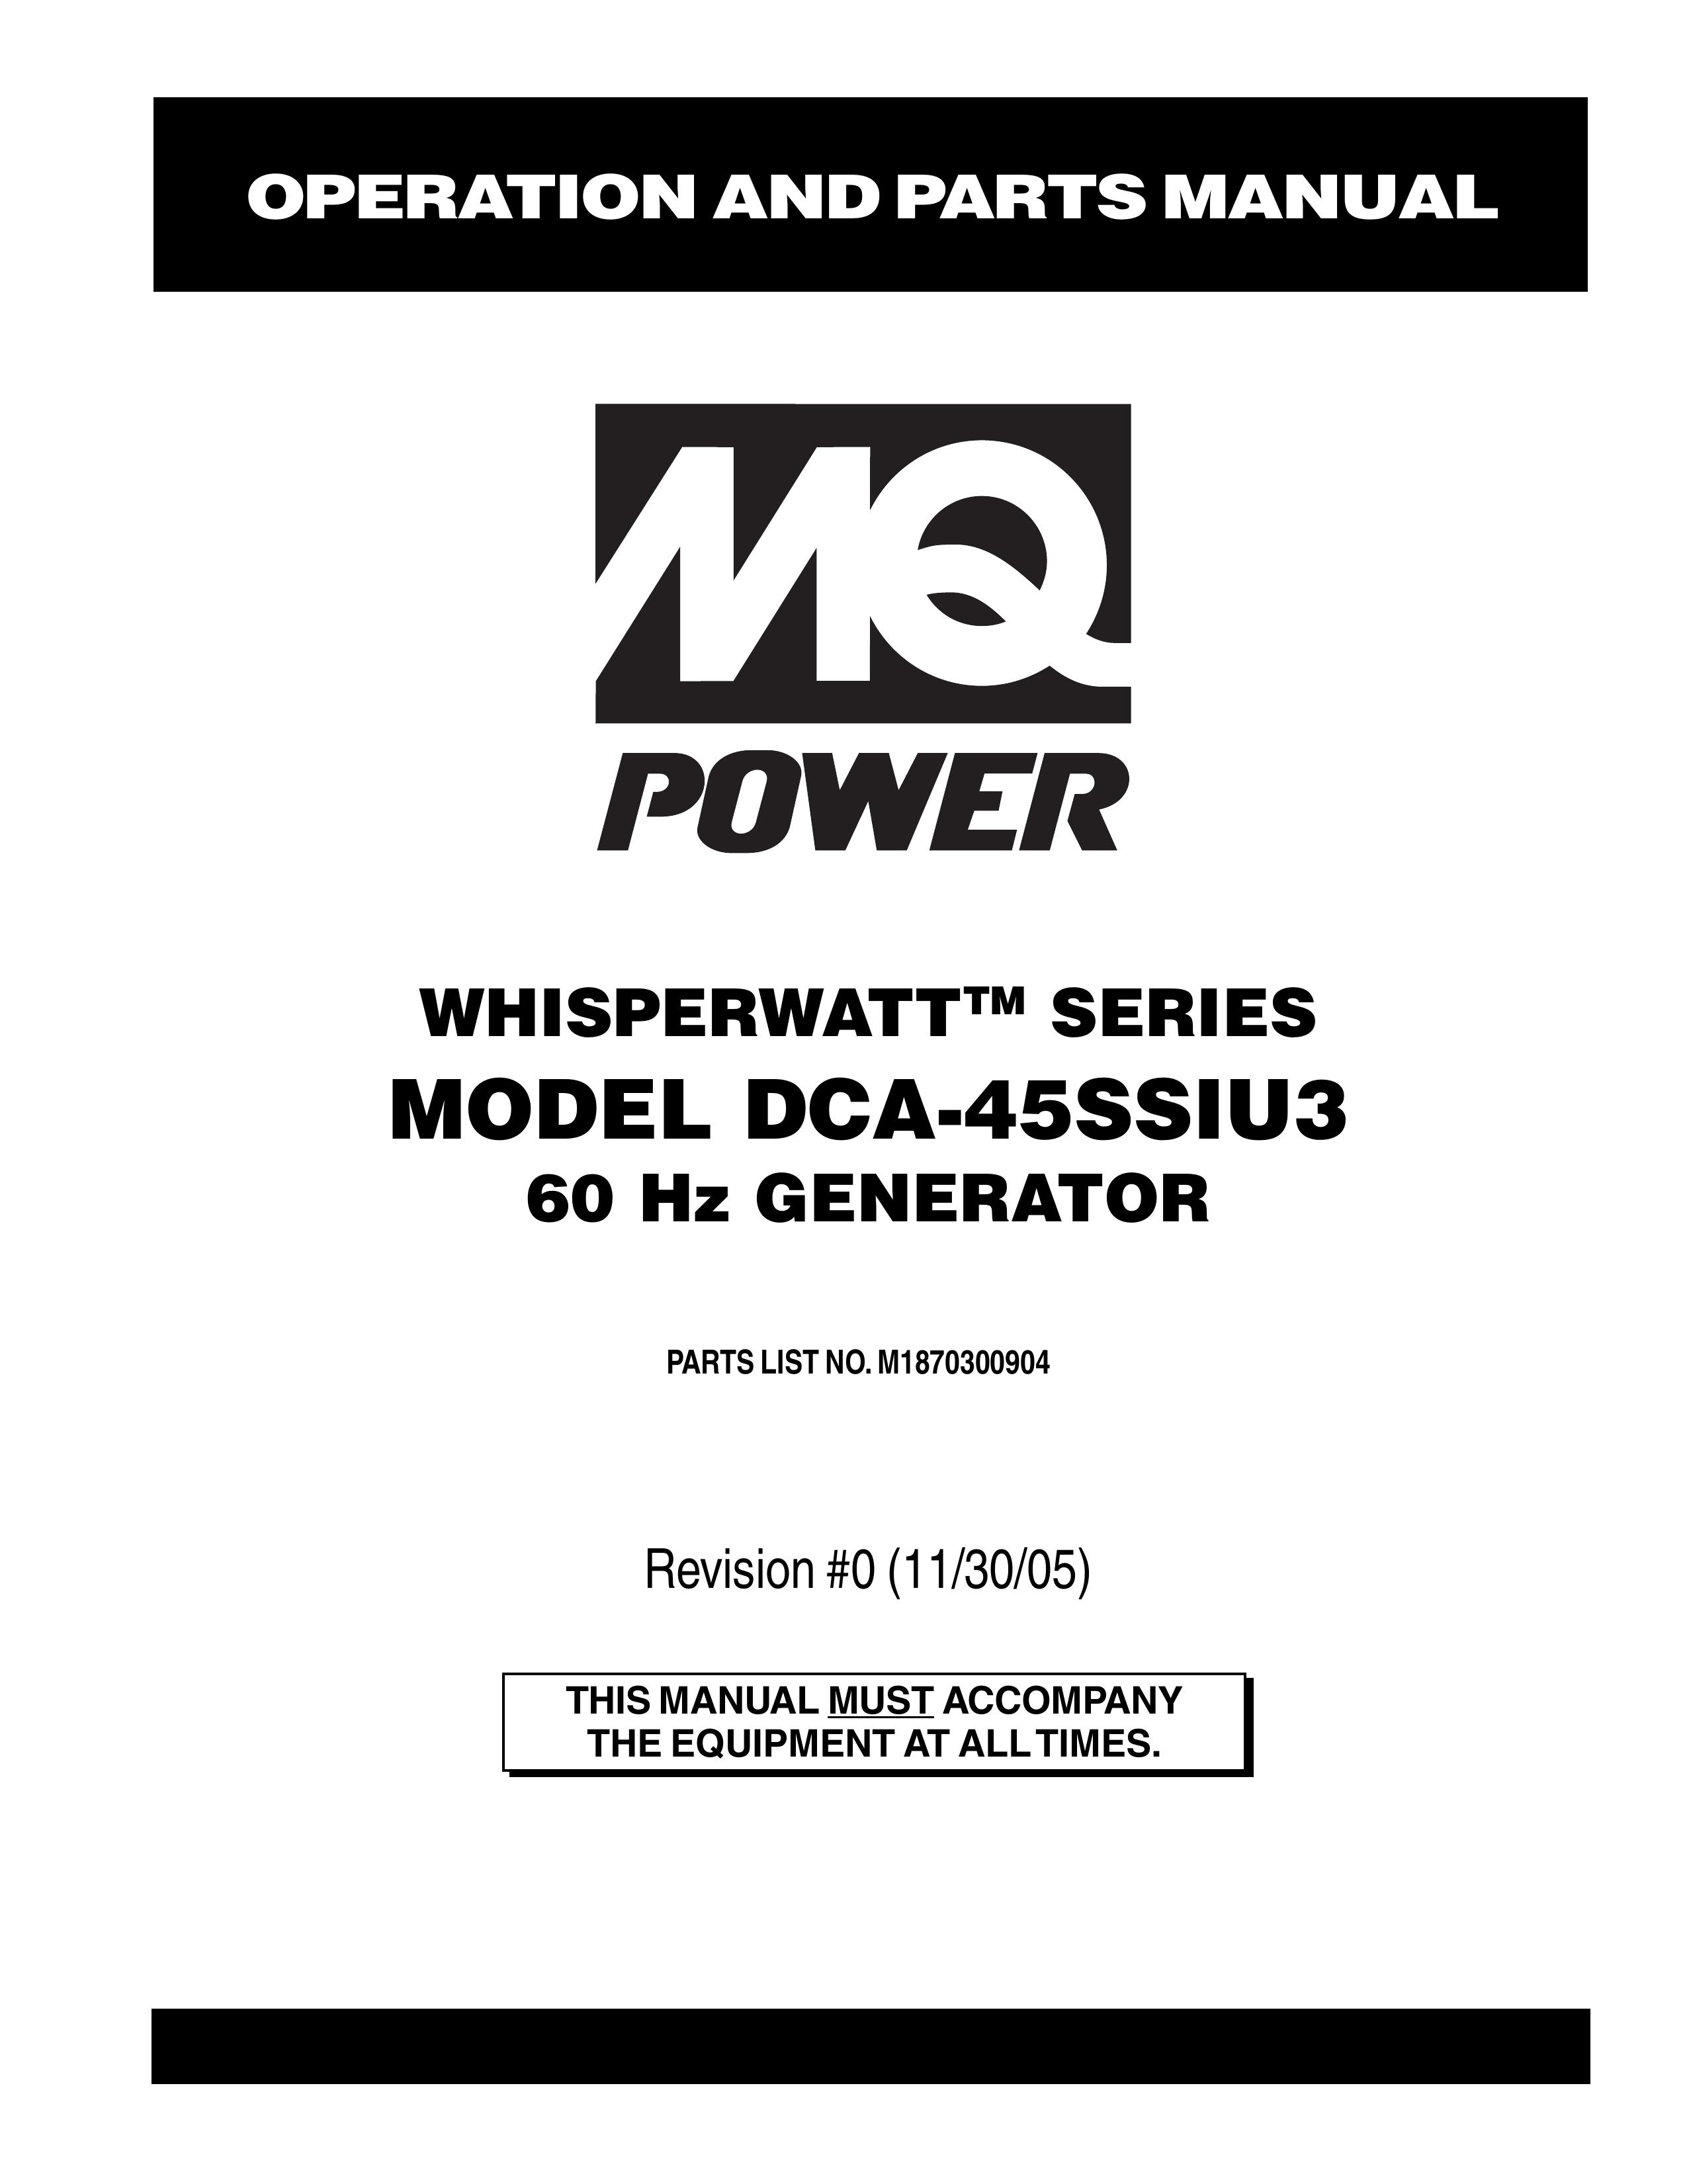 Multiquip DCA-45SSIU3 Portable Generator User Manual